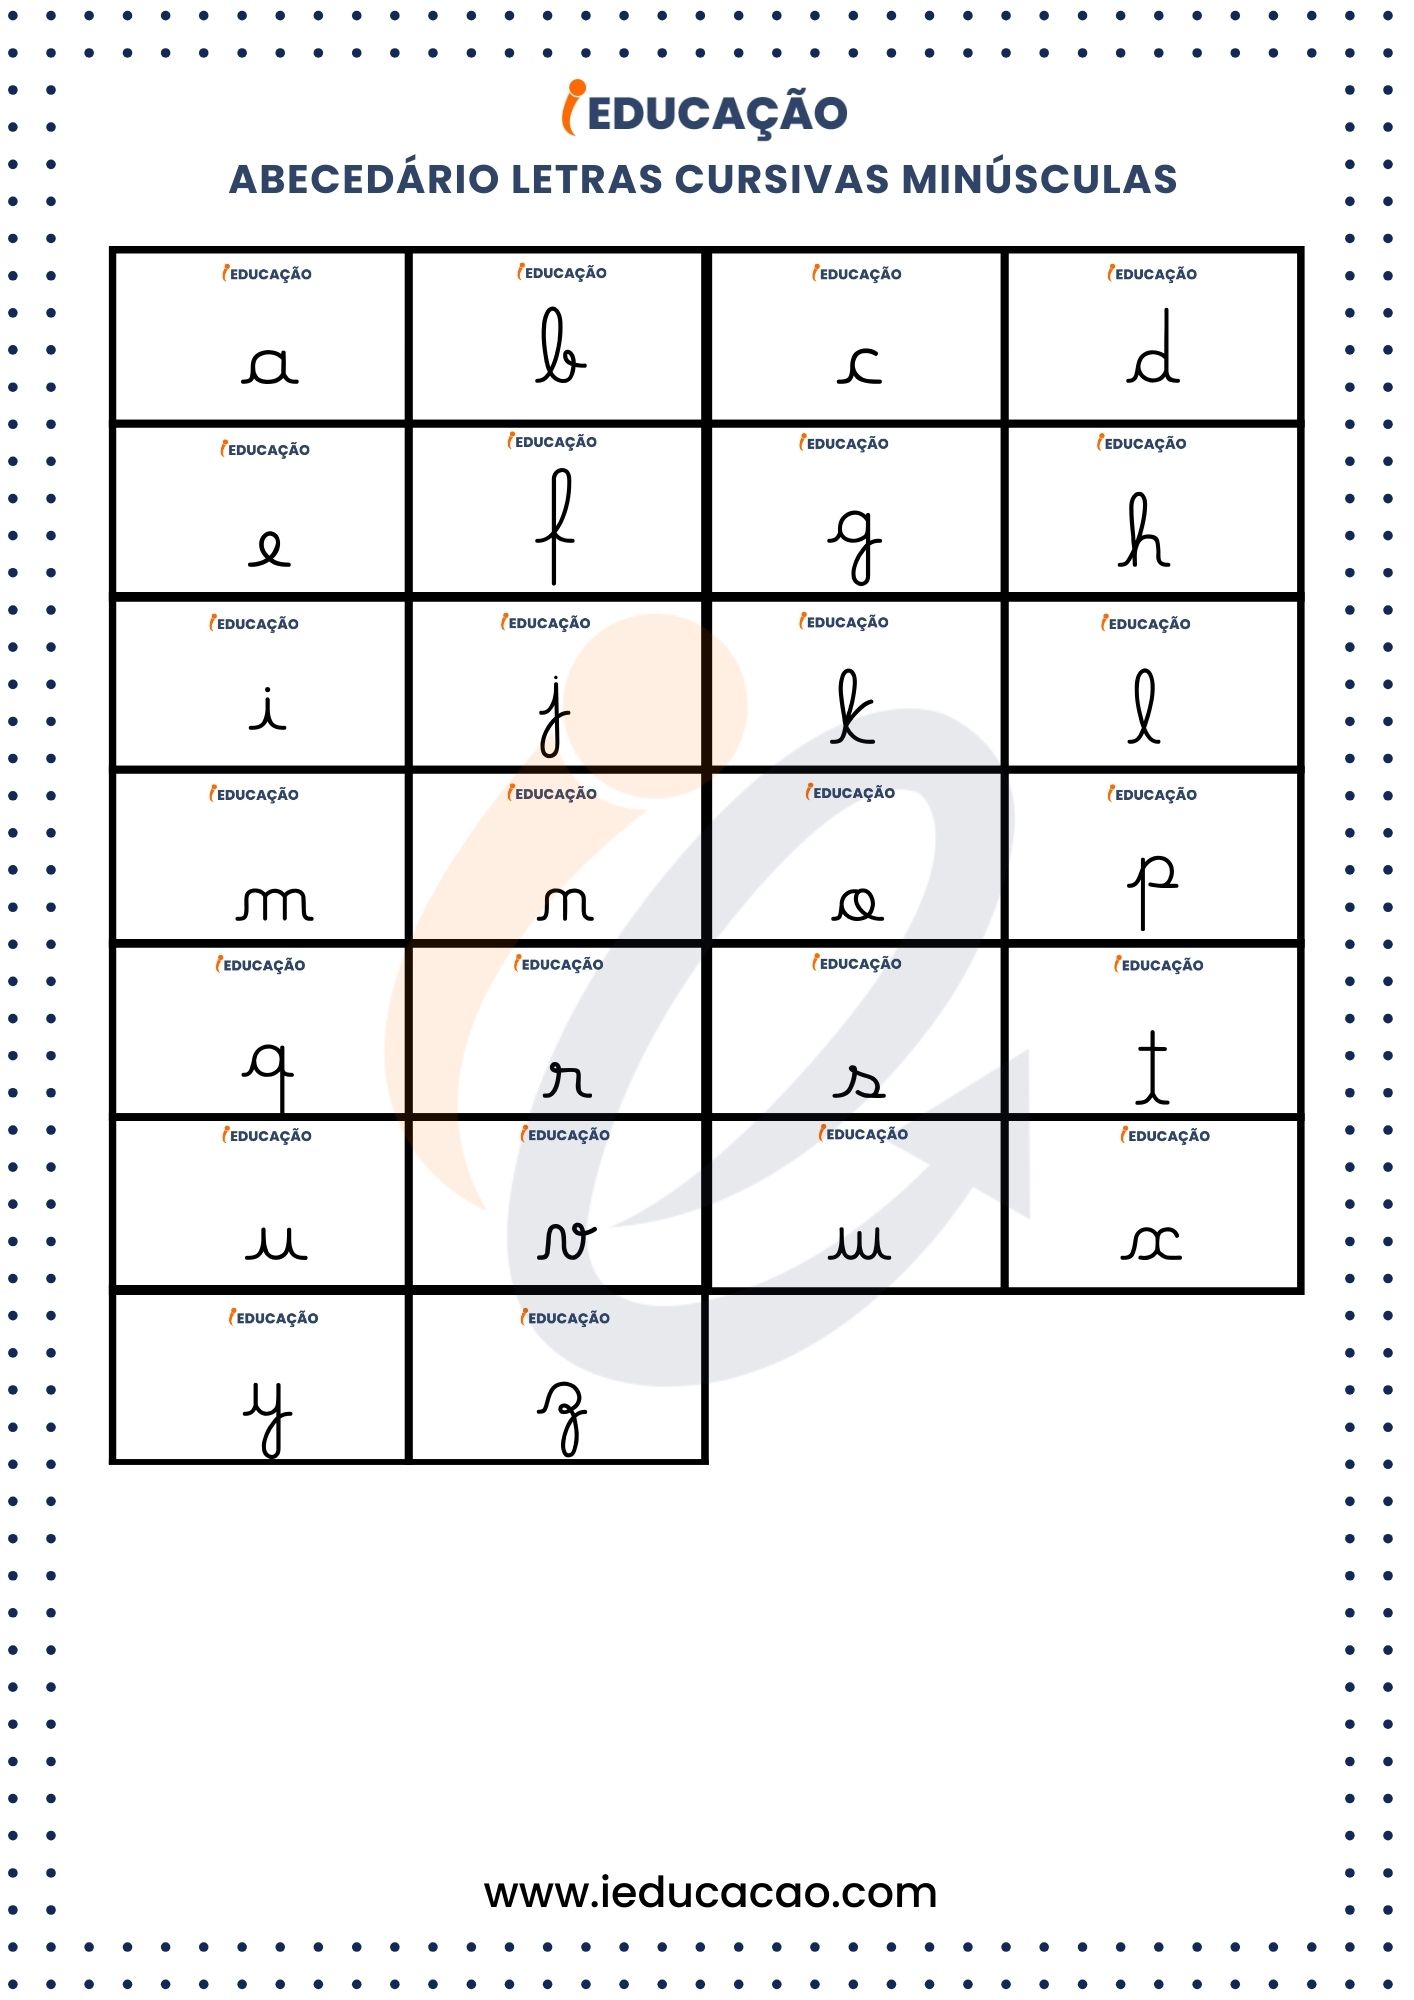 Abecedário com Letras Cursivas Minúsculas- Alfabeto completo cursivo.jpg